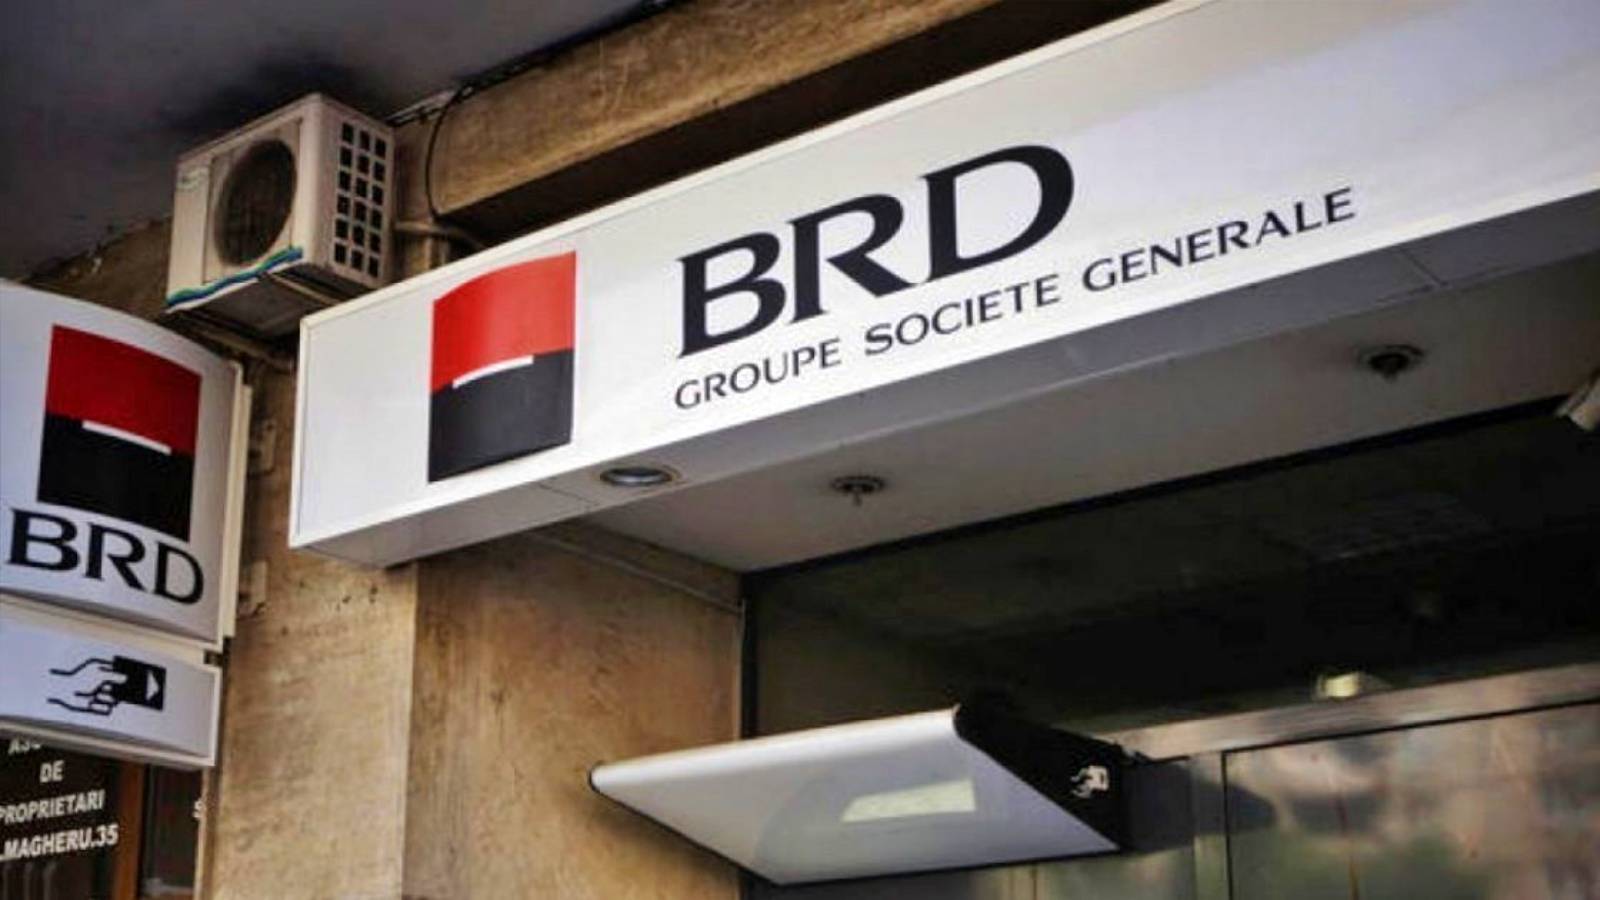 BRD Romania Notificarea IMPORTANTA Transmisa OFICIAL Clientilor Romani